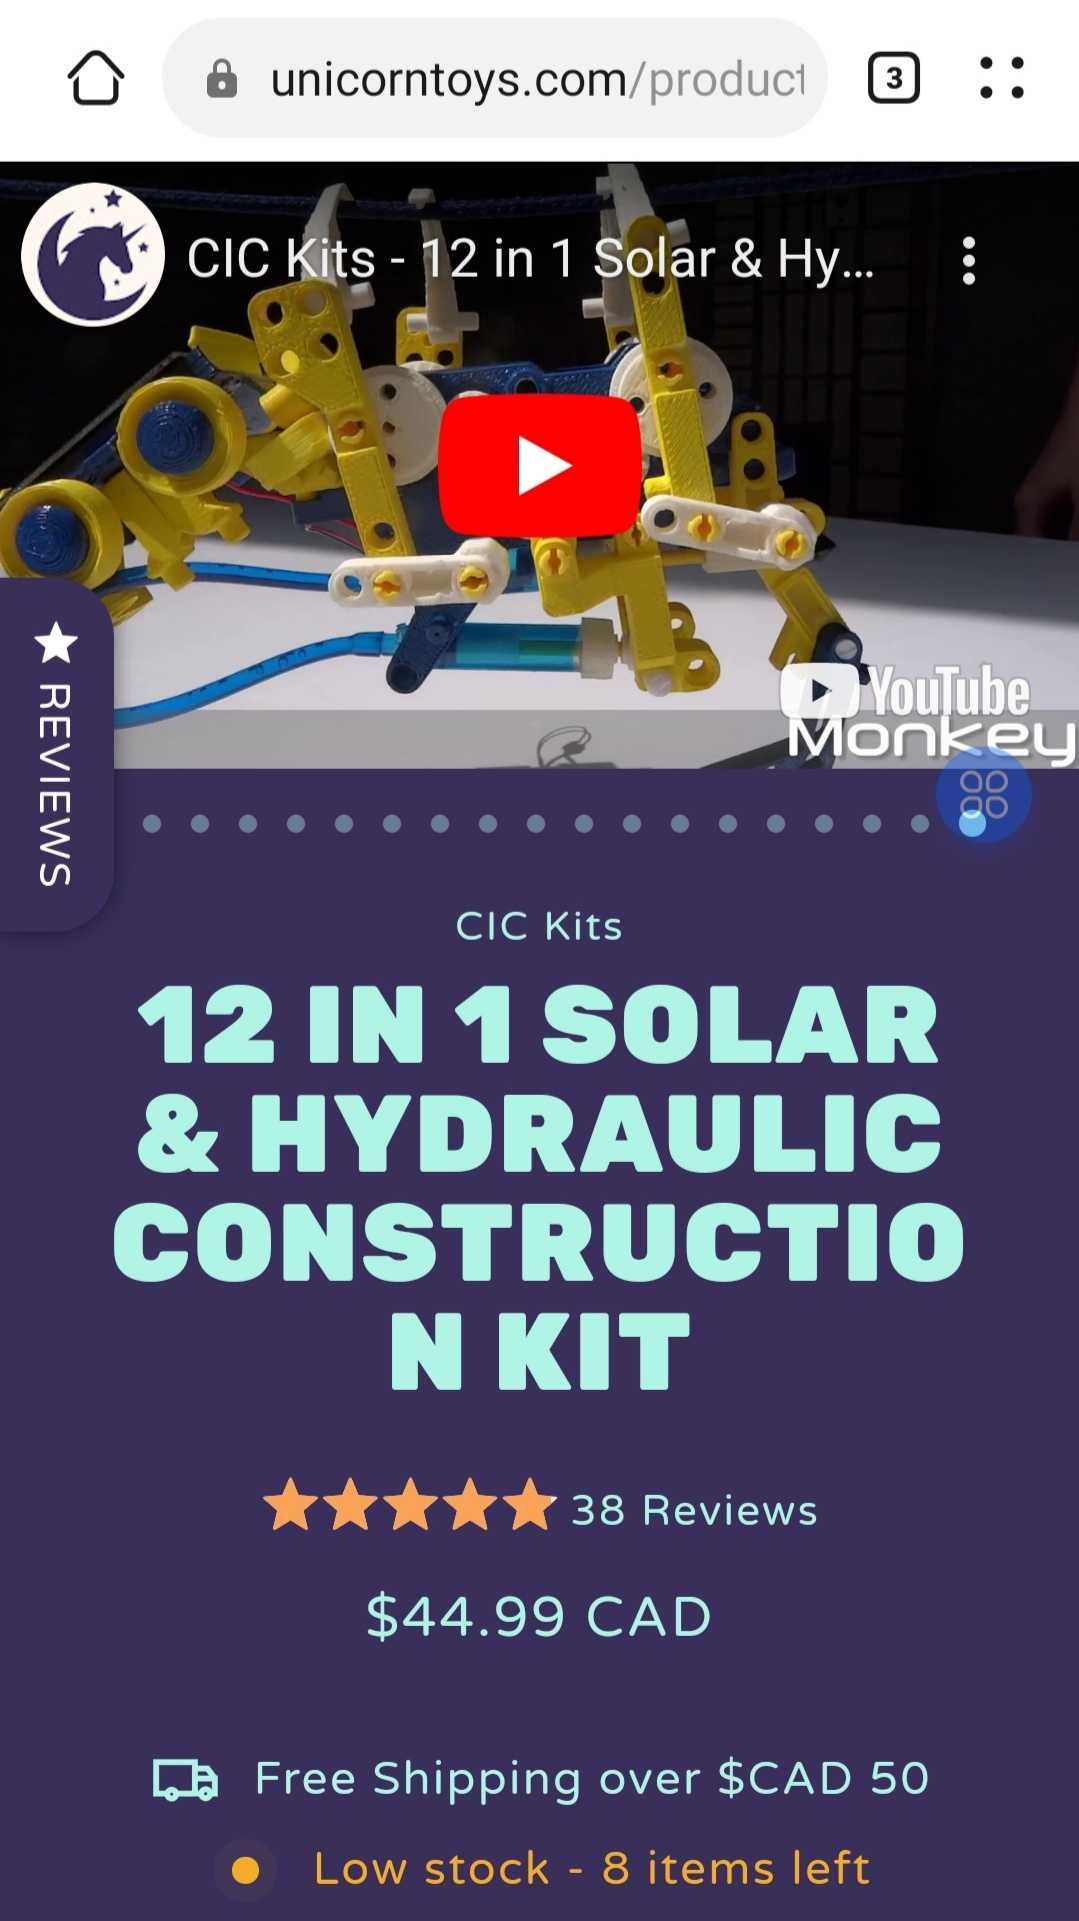 Конструктор 12 in 1 Solar & Hydraulic Construction Kit